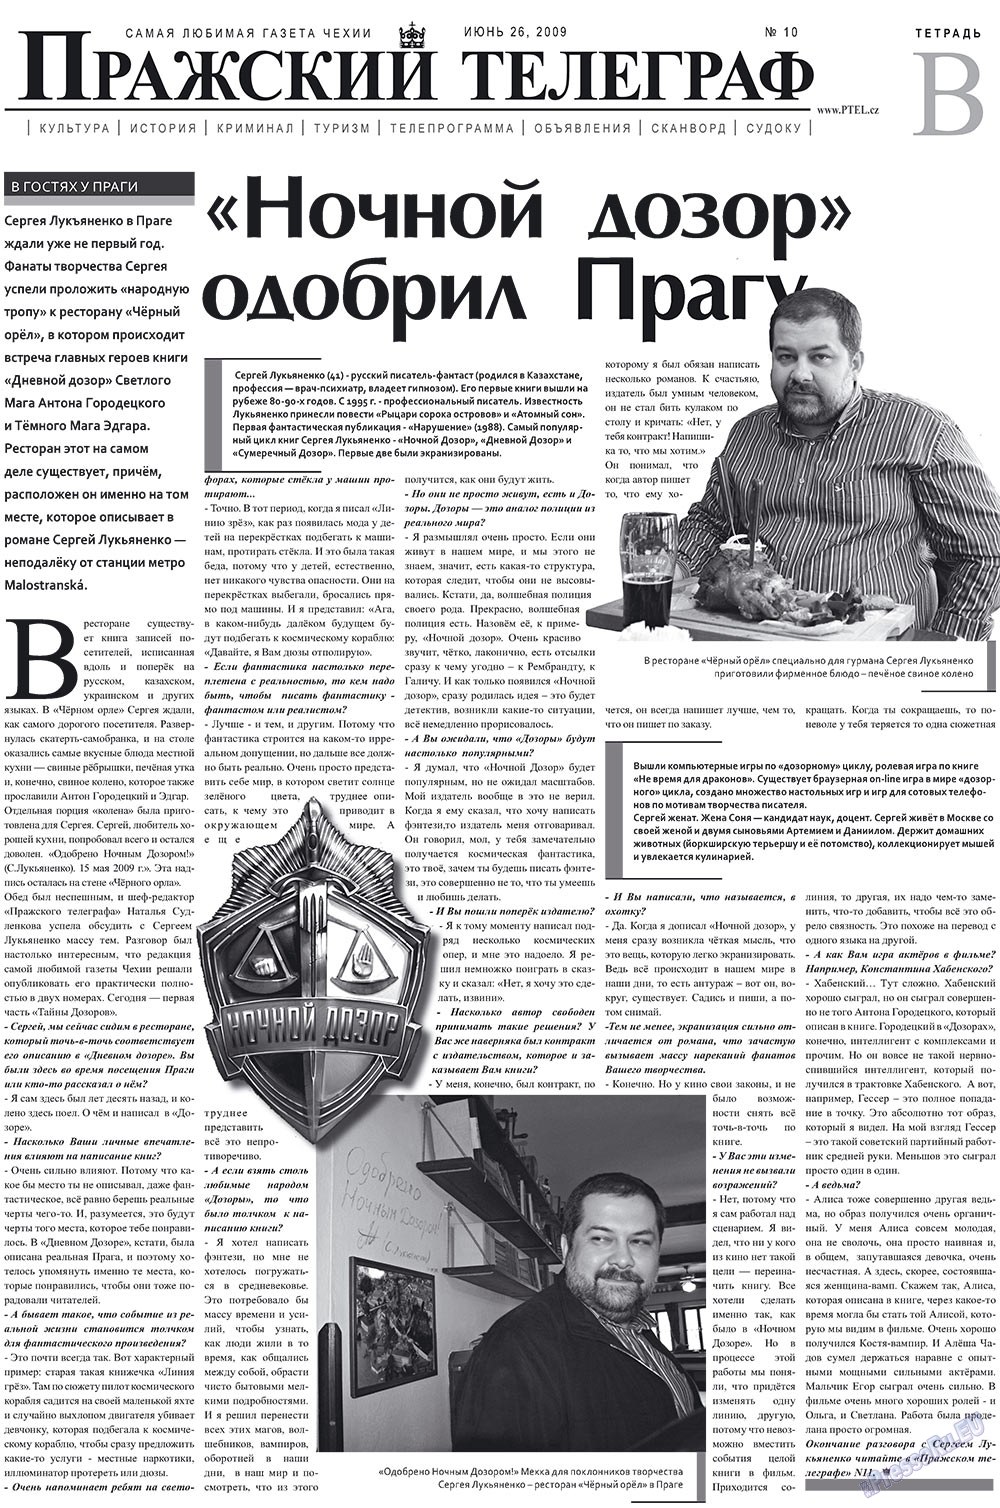 Пражский телеграф, газета. 2009 №10 стр.9